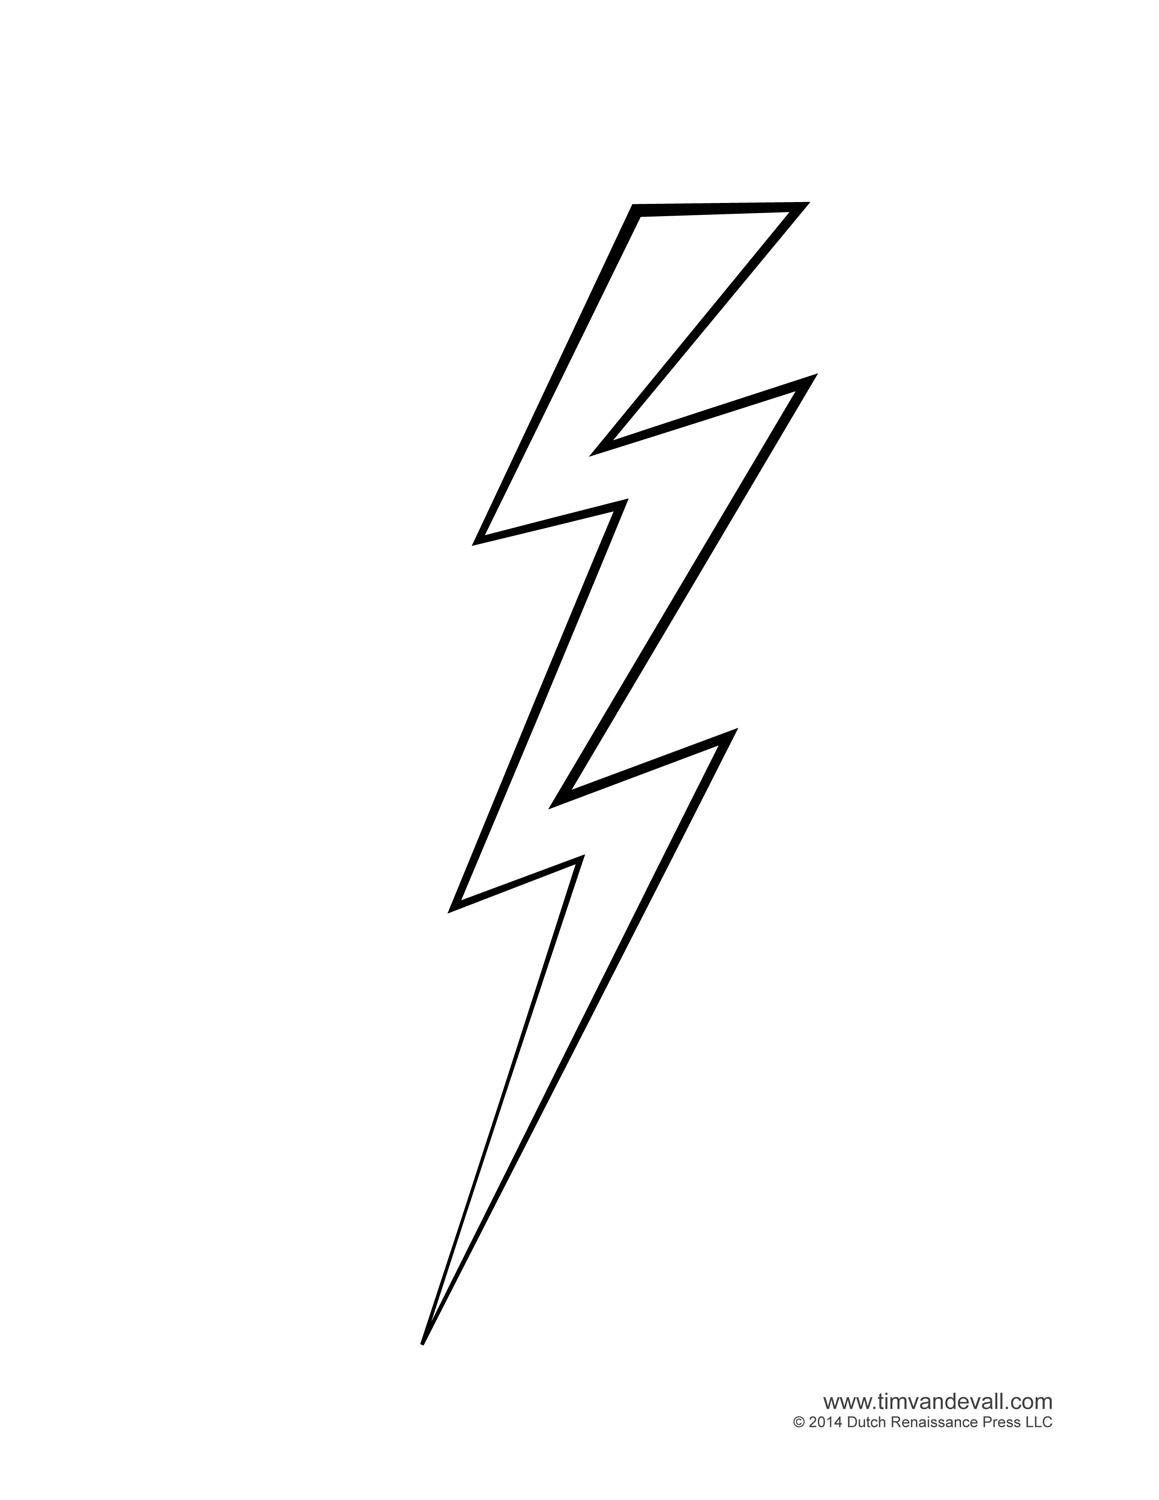 Lightning bolt lighting bolt free clipart image